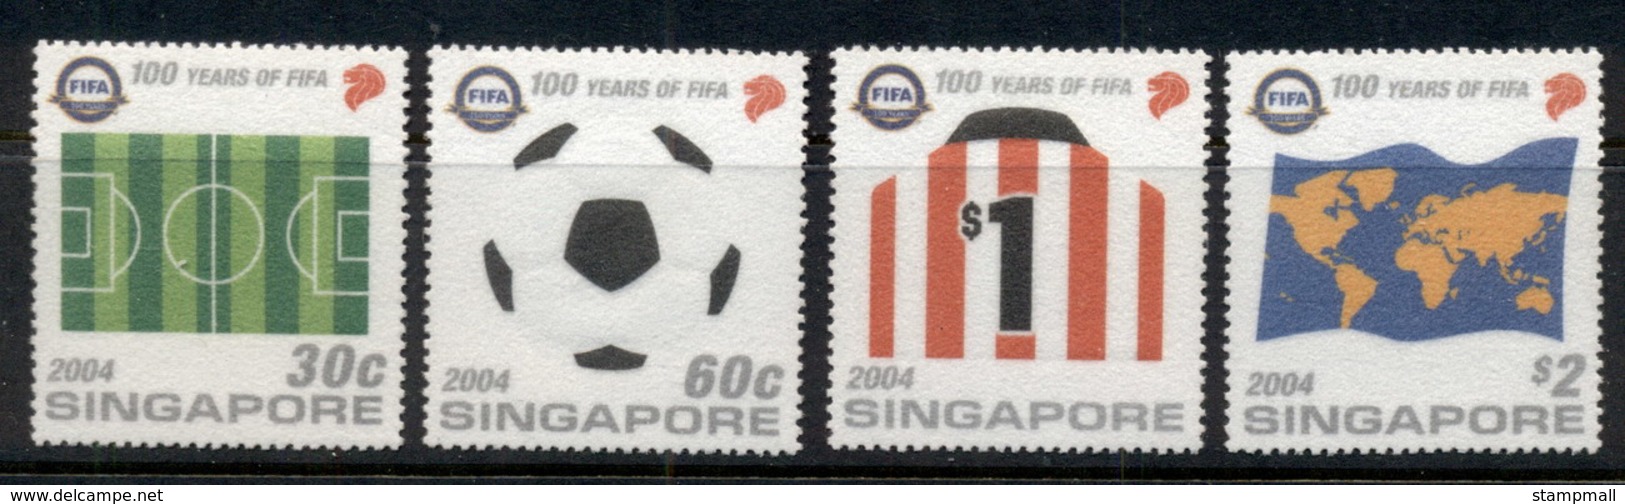 Singapore 2004 FIFA Soccer MUH - Singapur (1959-...)